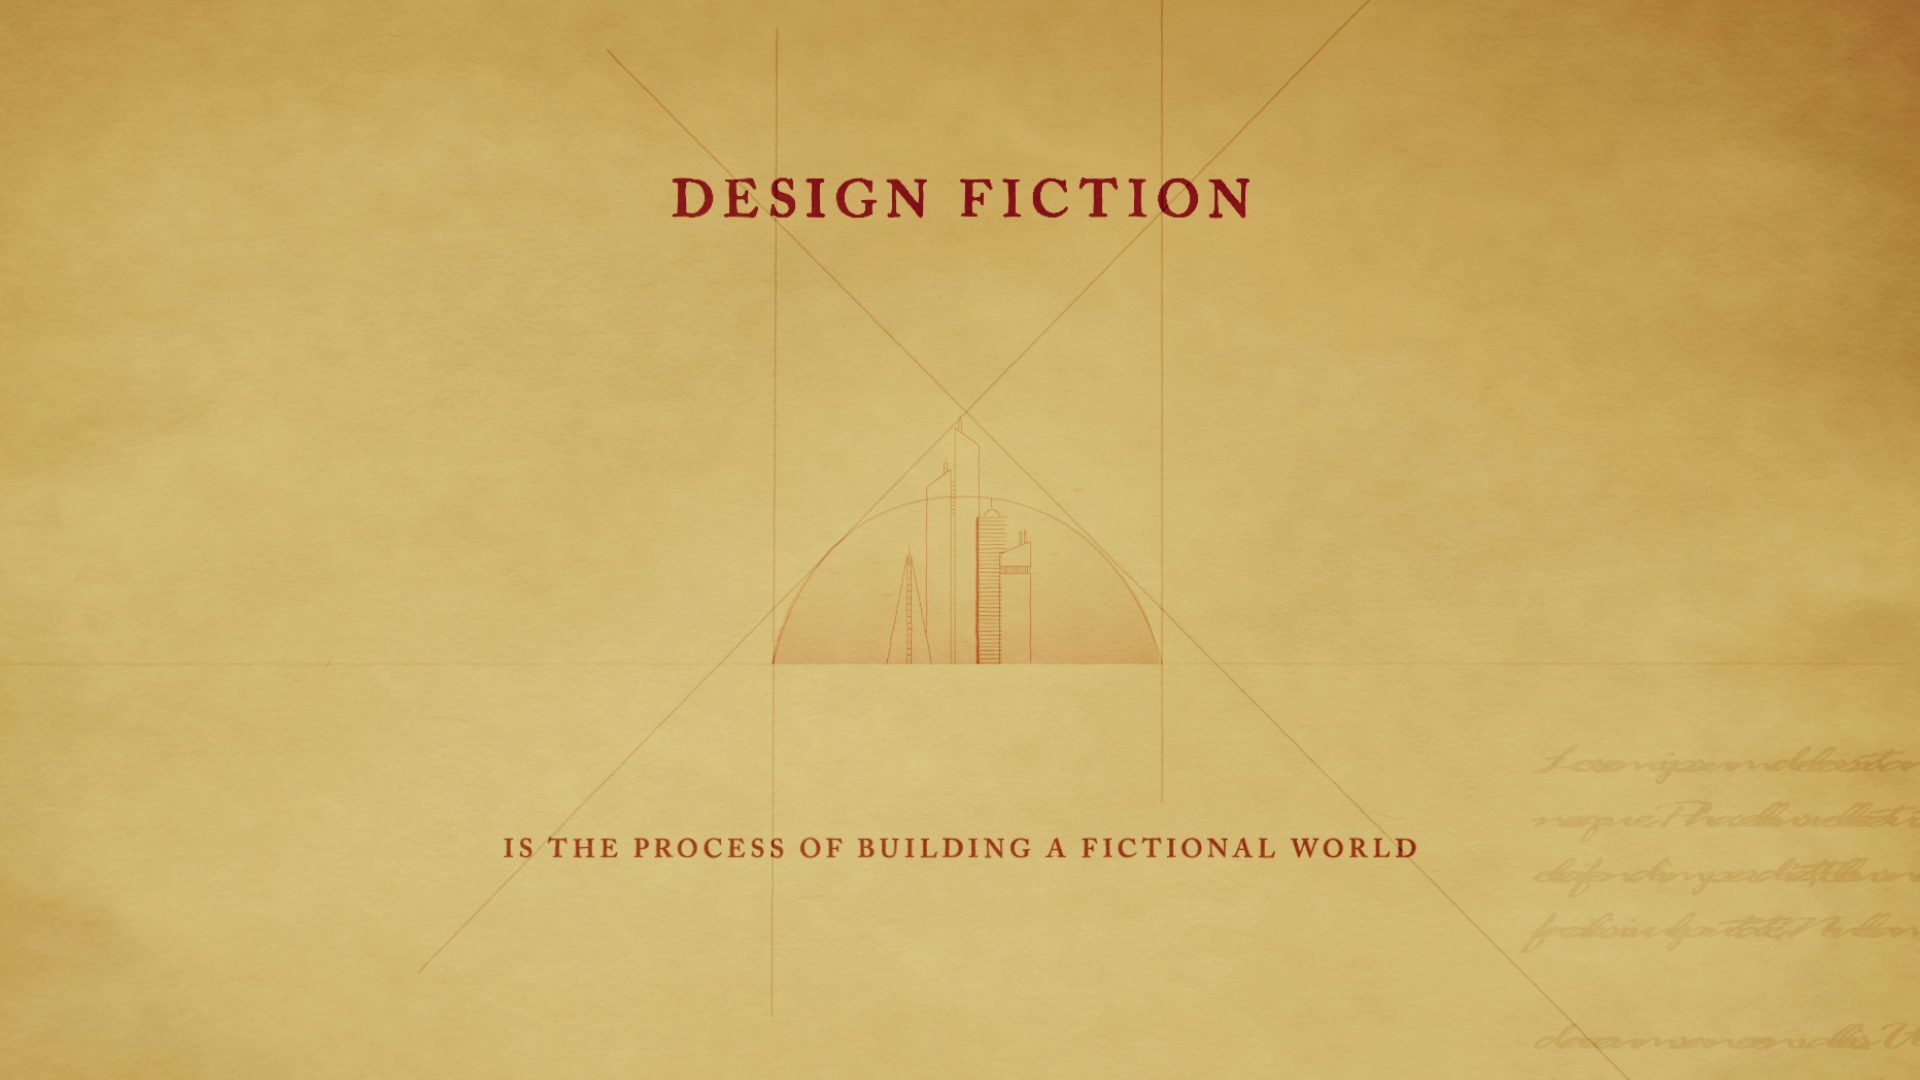 Drawn city for design fiction motion design piece